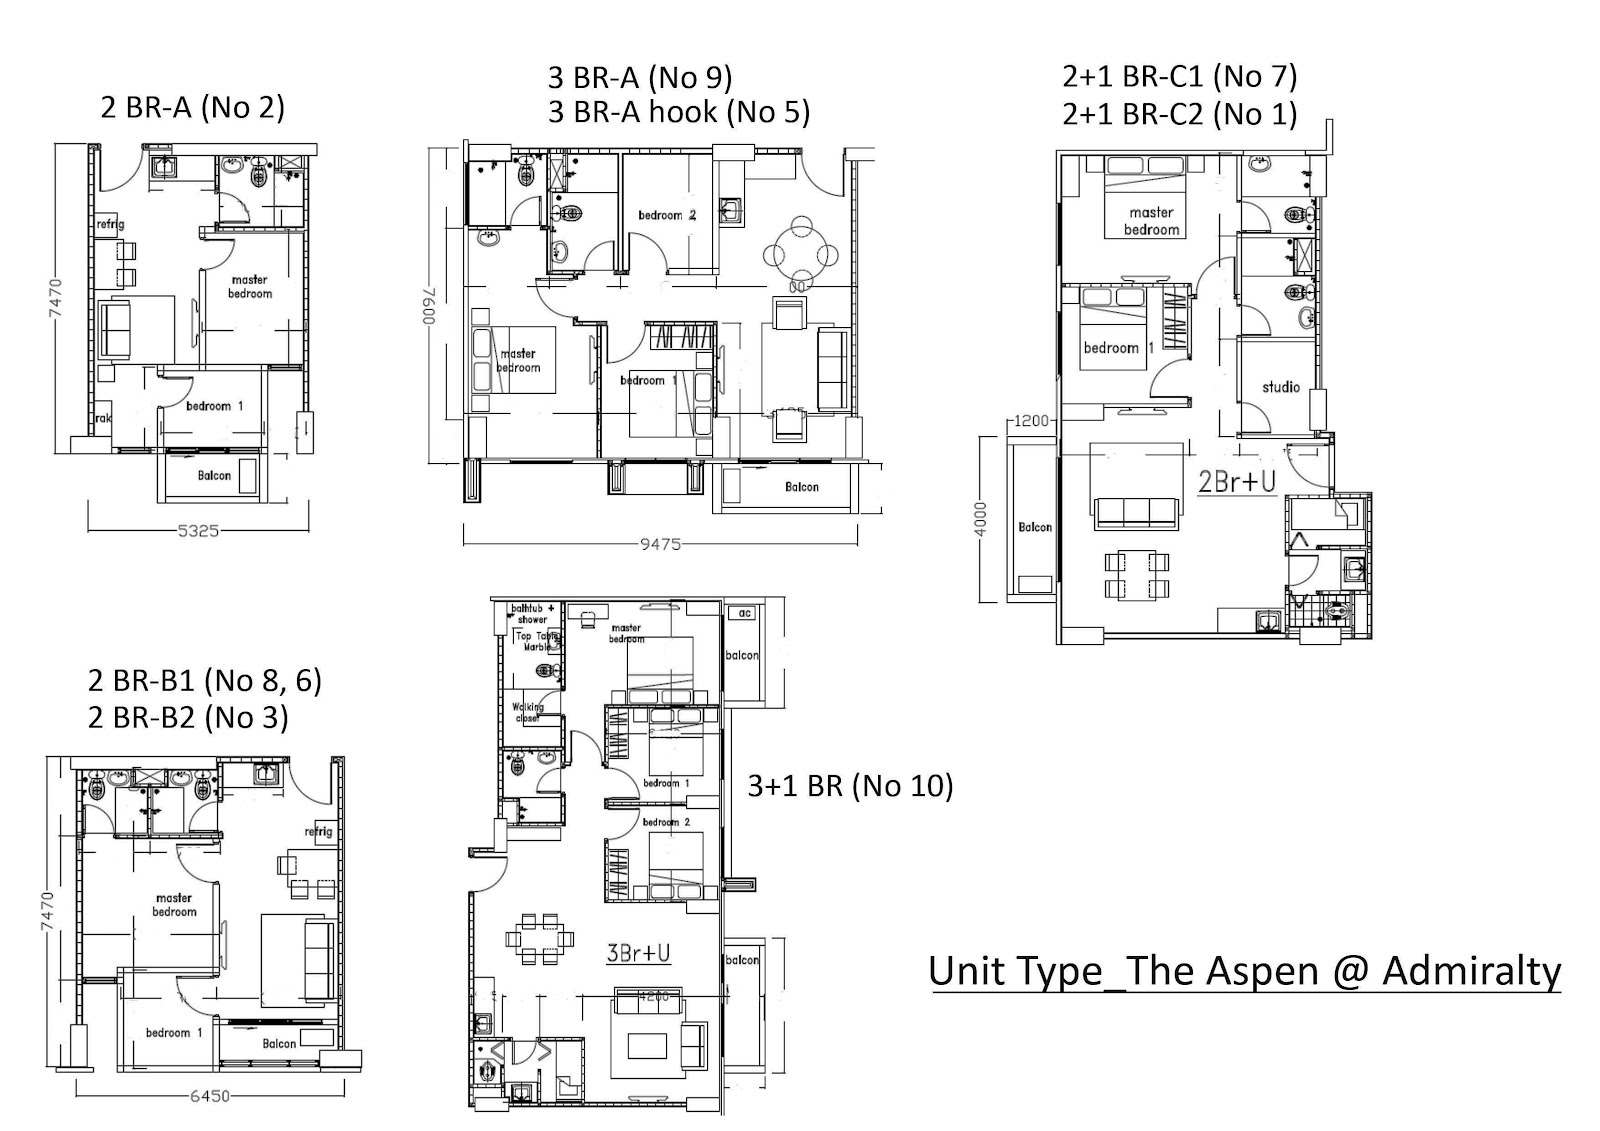 The Aspen ADMIRALTY Apartment